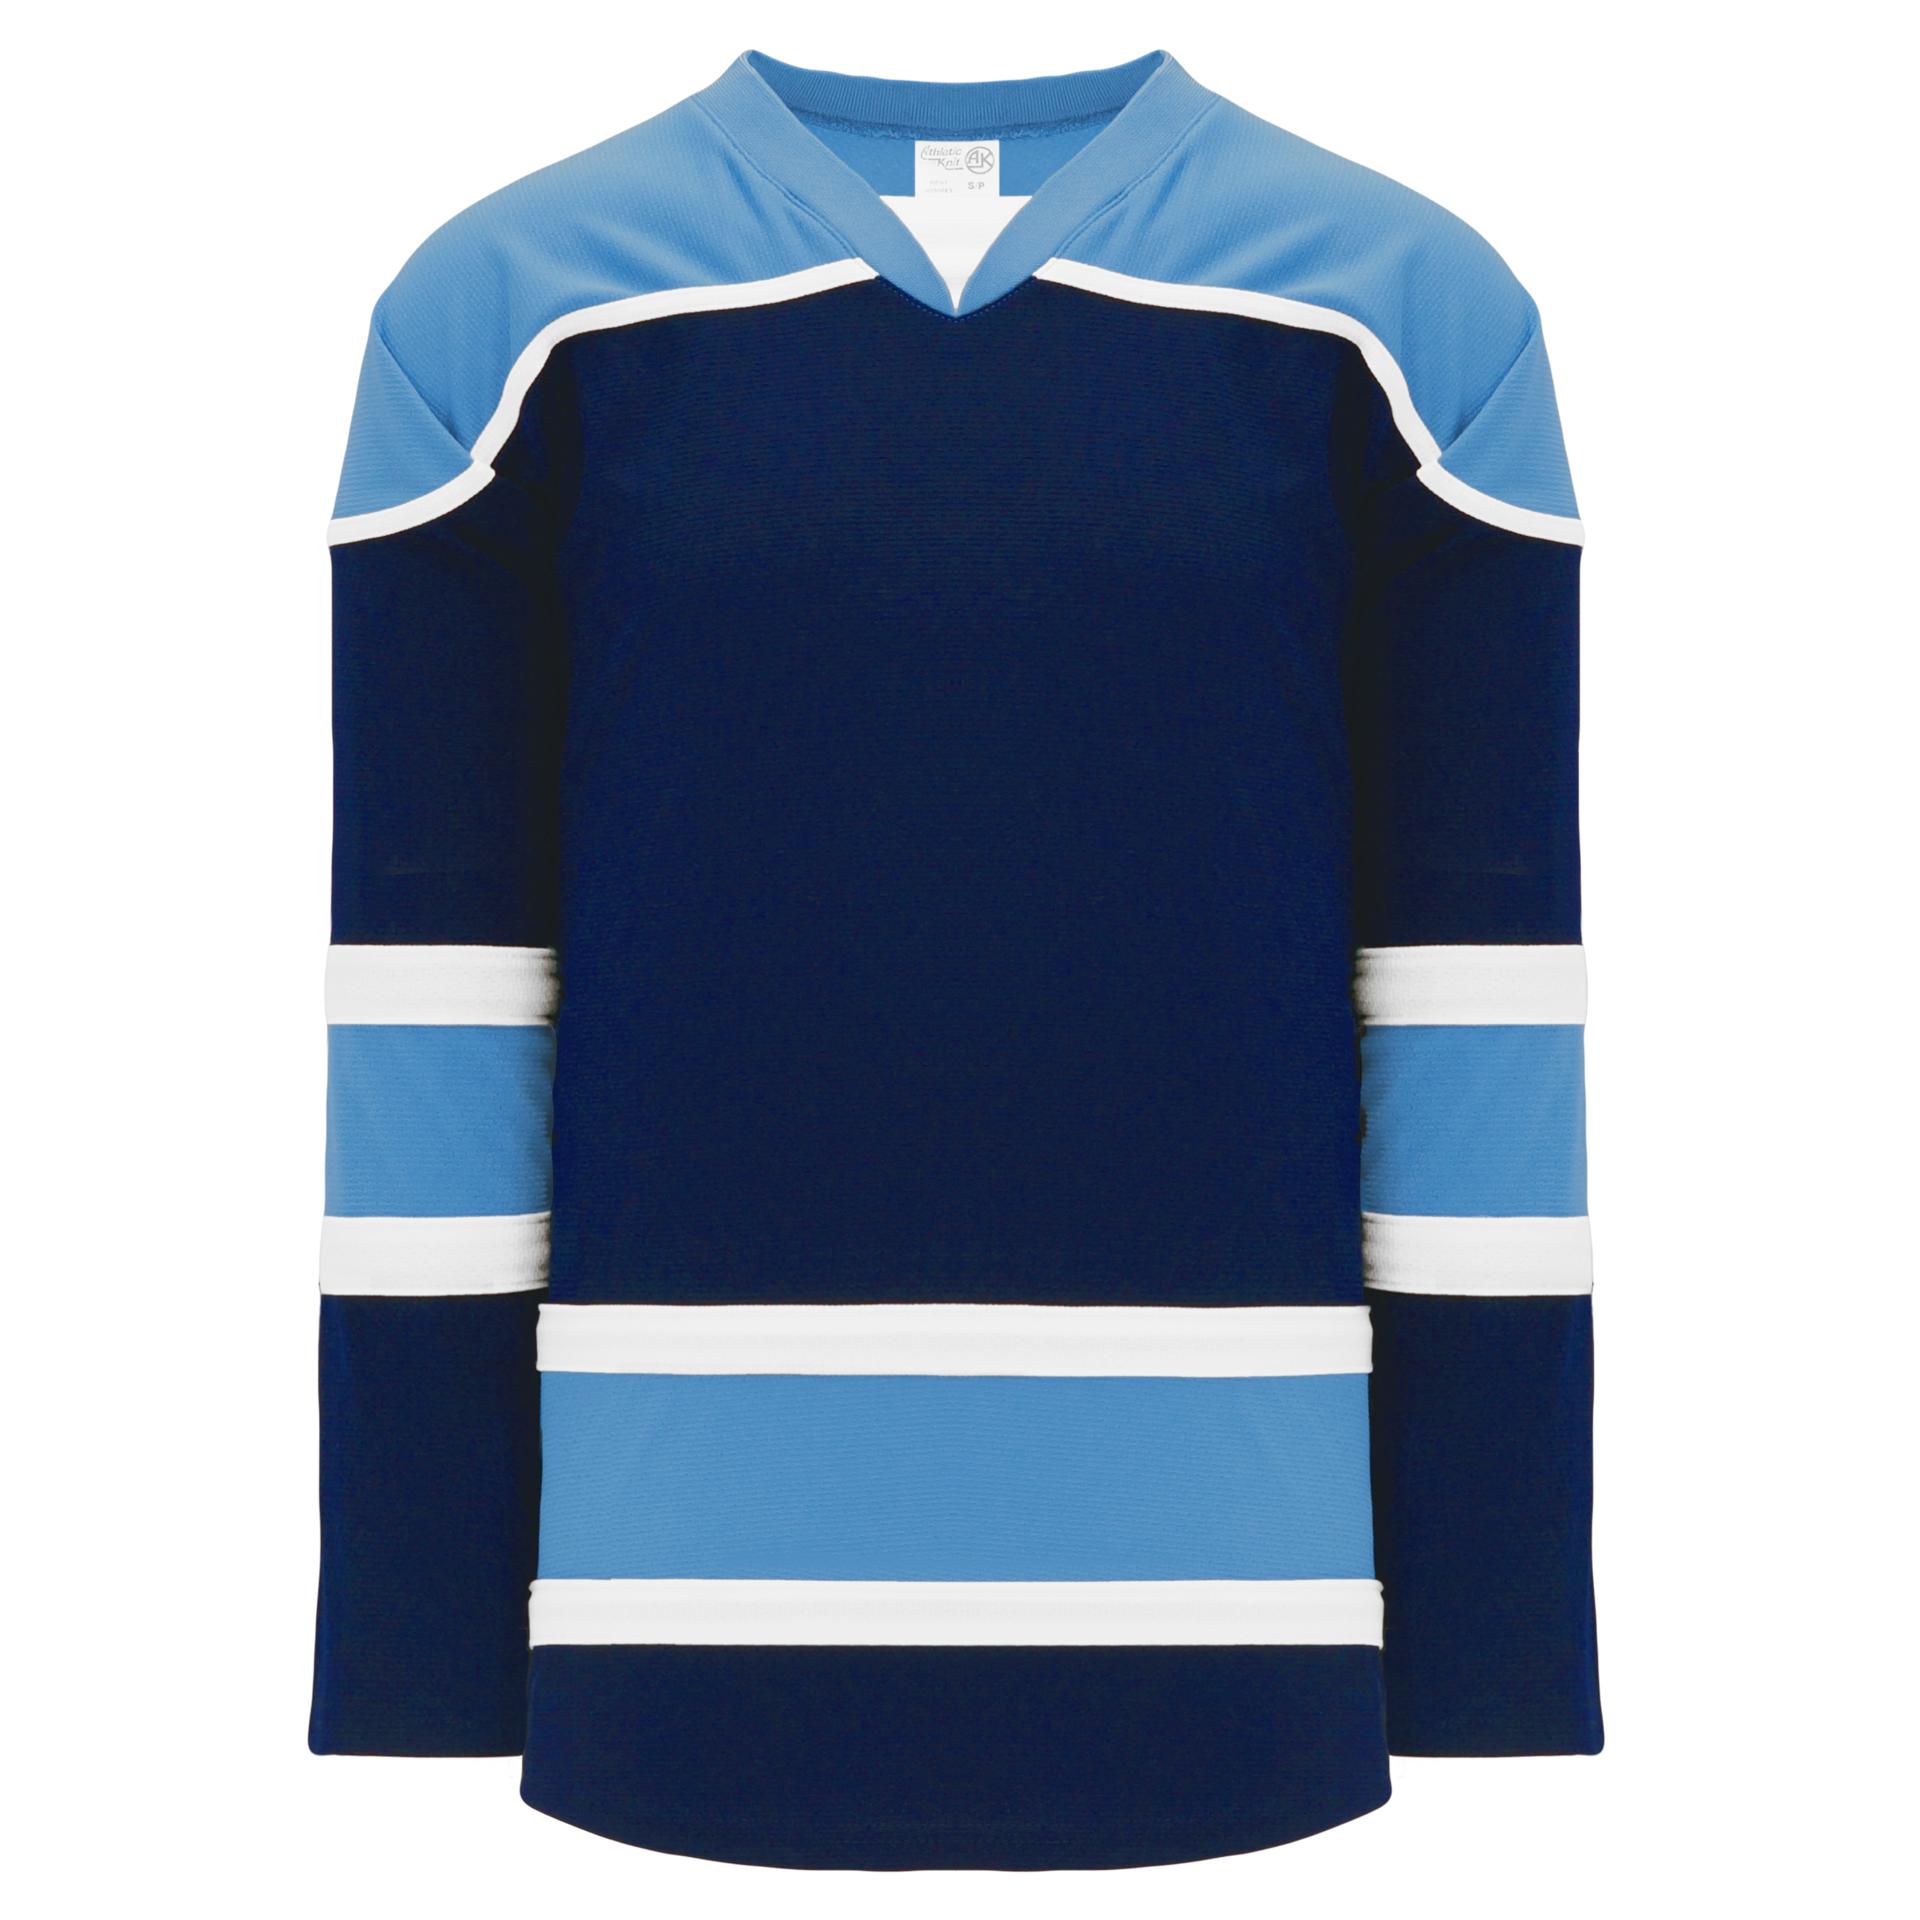 Light Blue/Black Sublimated Custom Plain Hockey Jerseys | YoungSpeeds